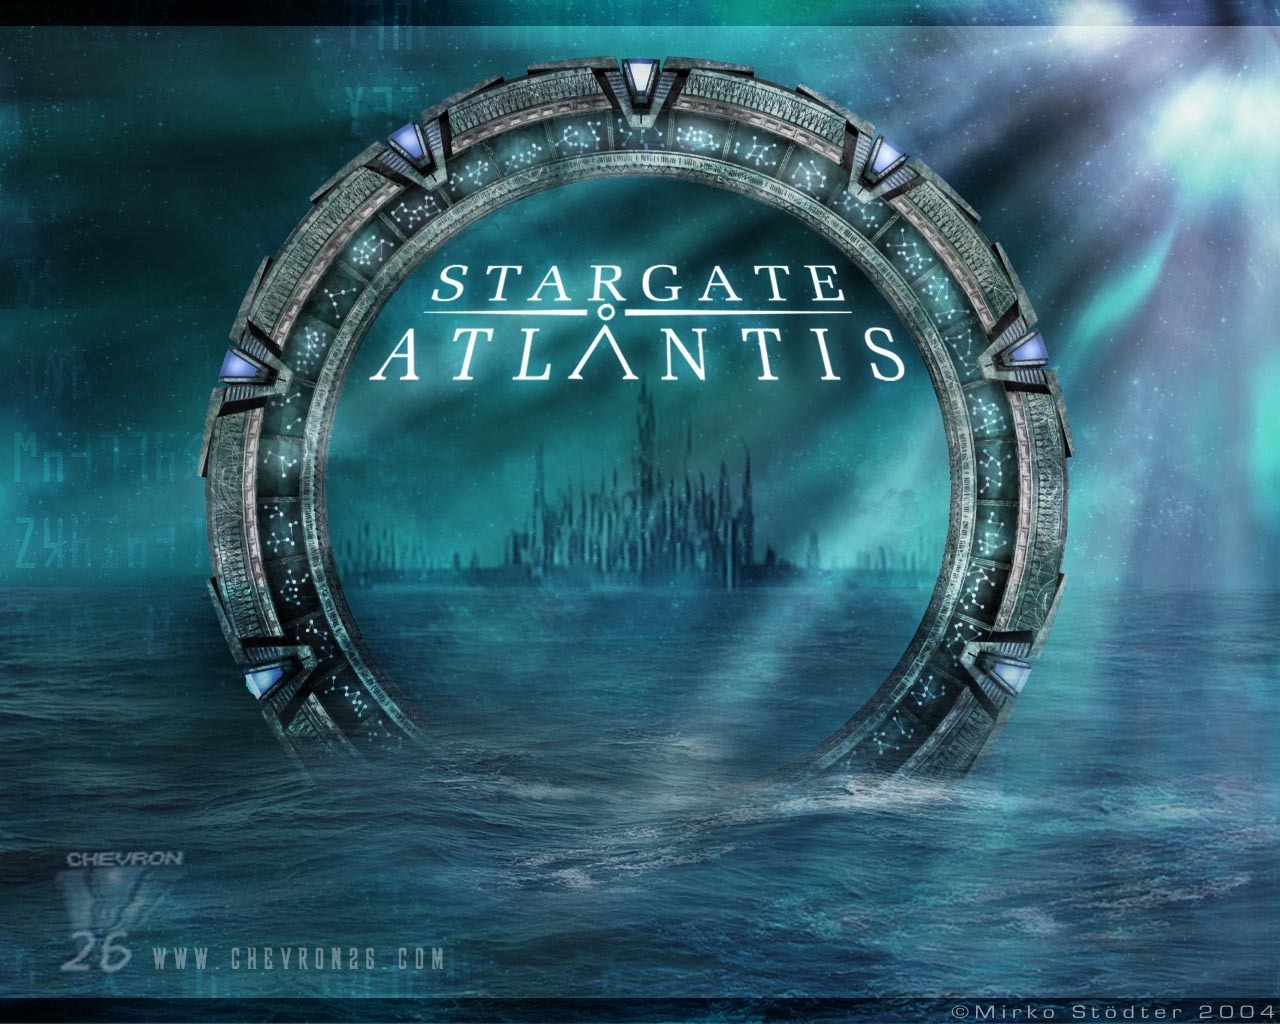 Stargate Atlantis Image Sga HD Wallpaper And Background